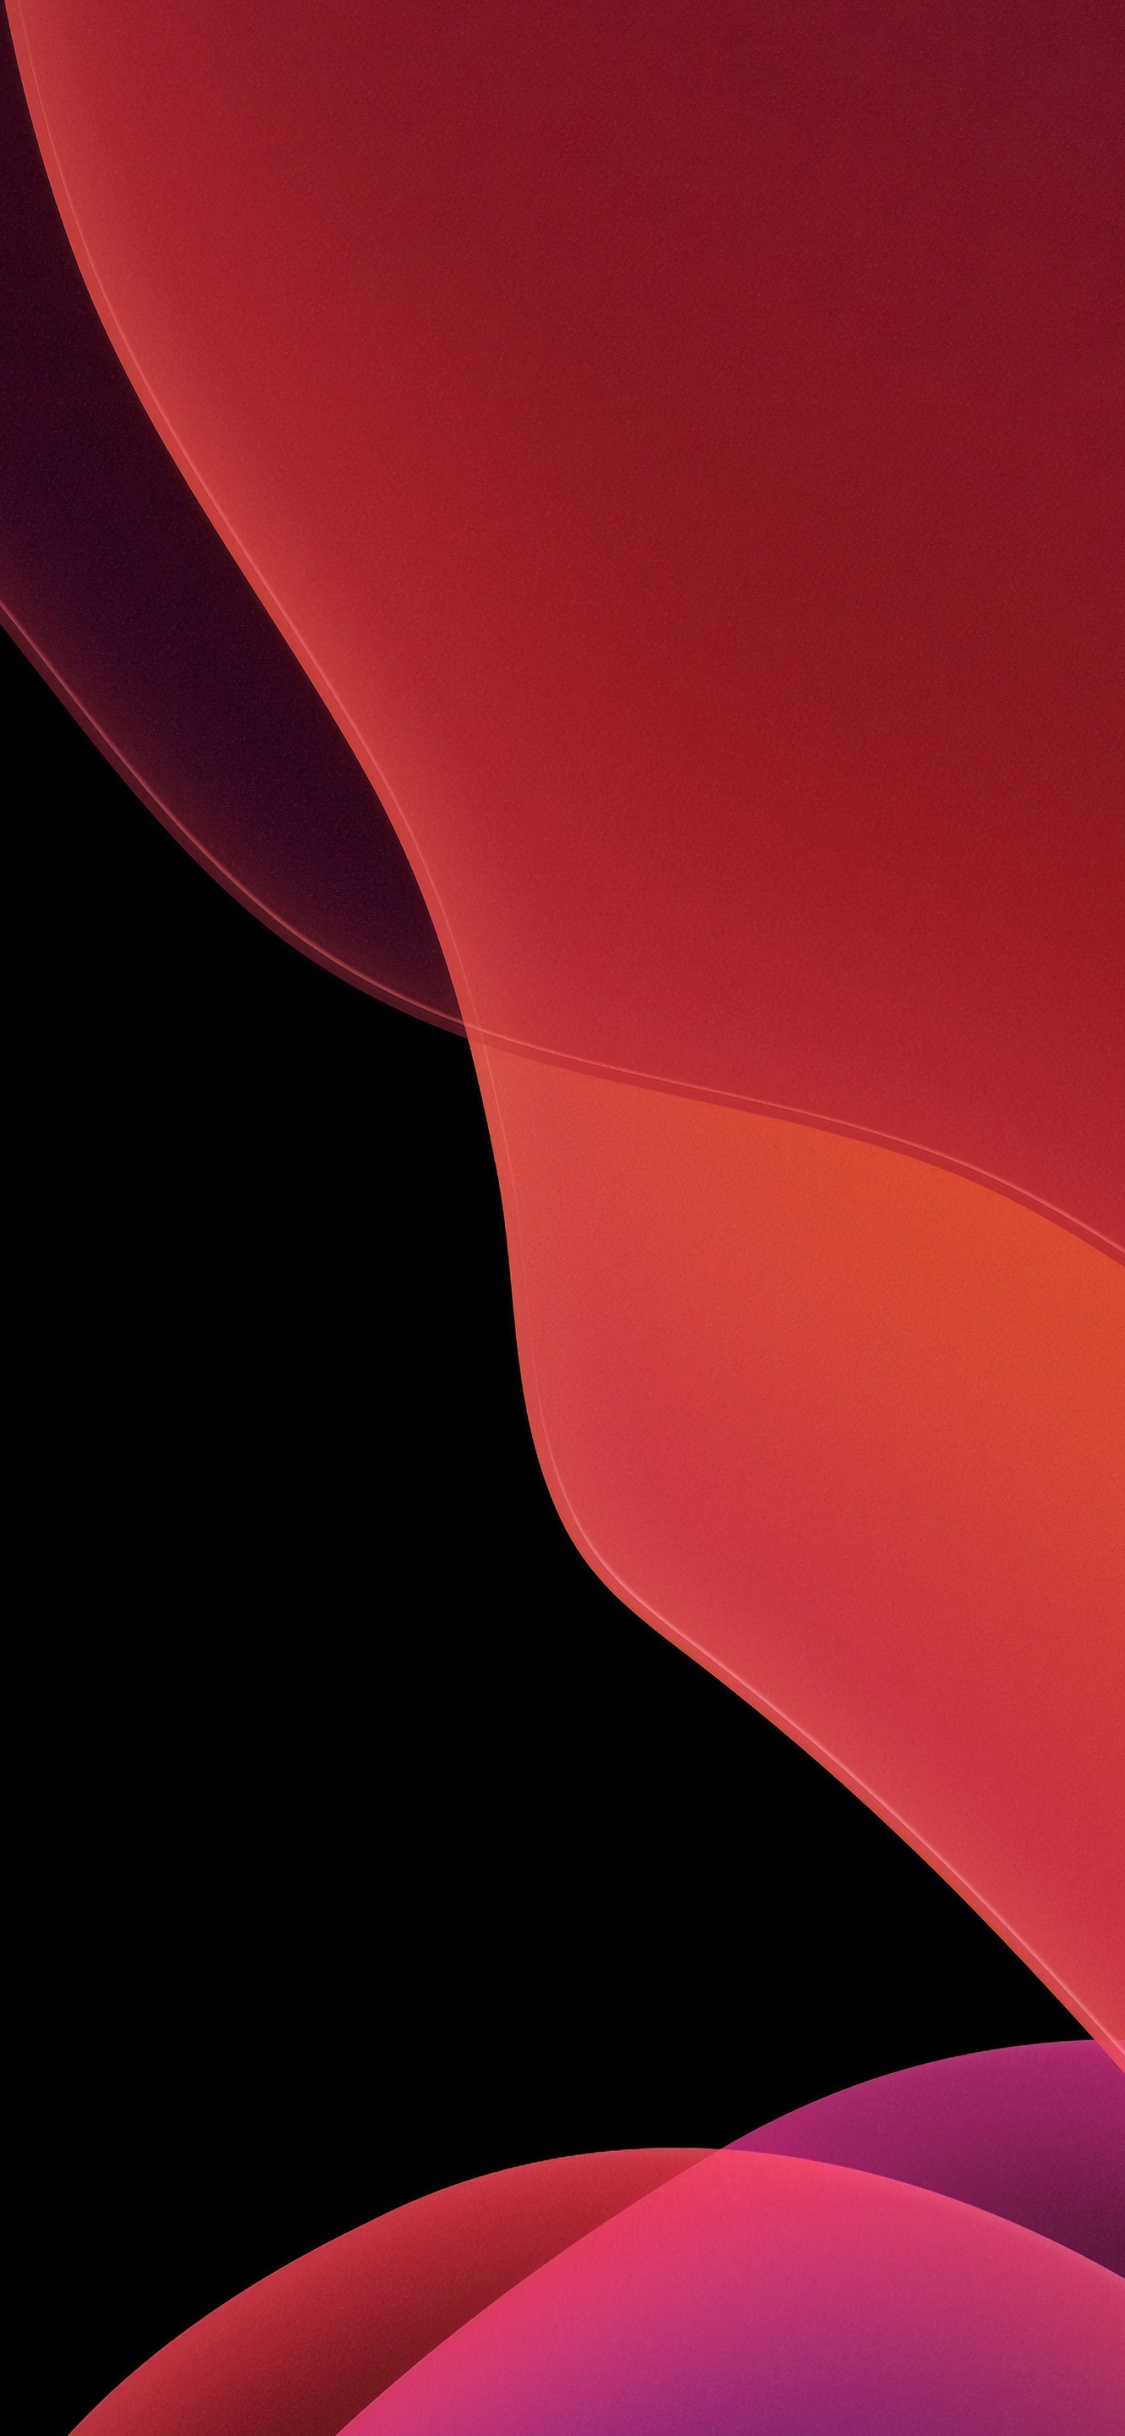 IOS 13, Ios, Apple, 橙色, 红色的 壁纸 1125x2436 允许